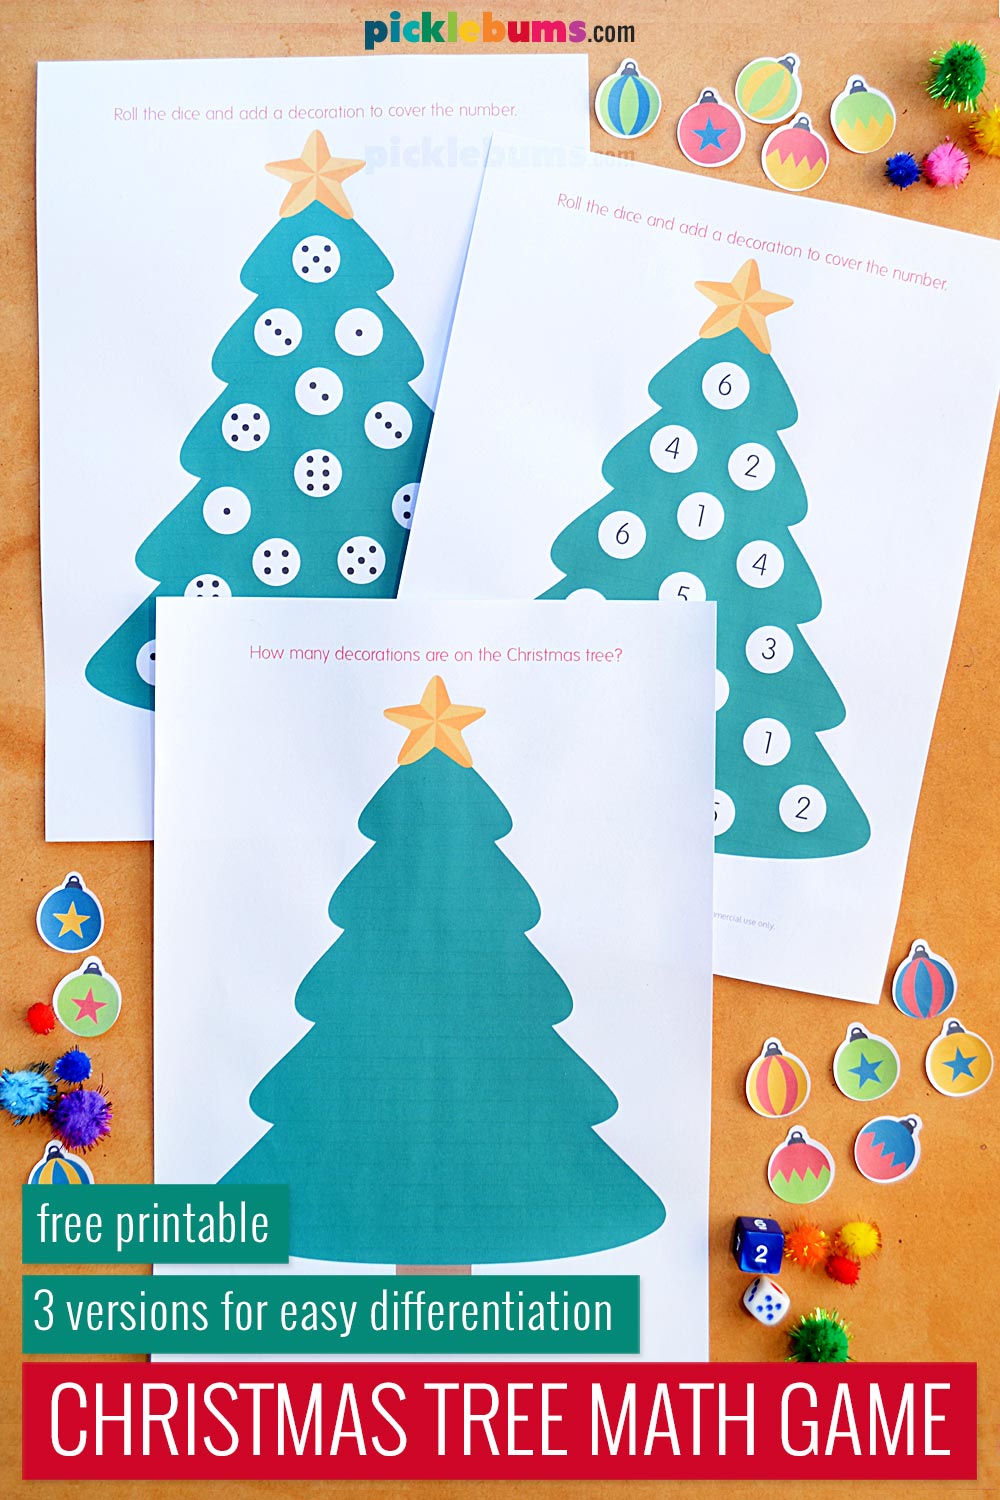 Printable Christmas tree maths roll and cover games